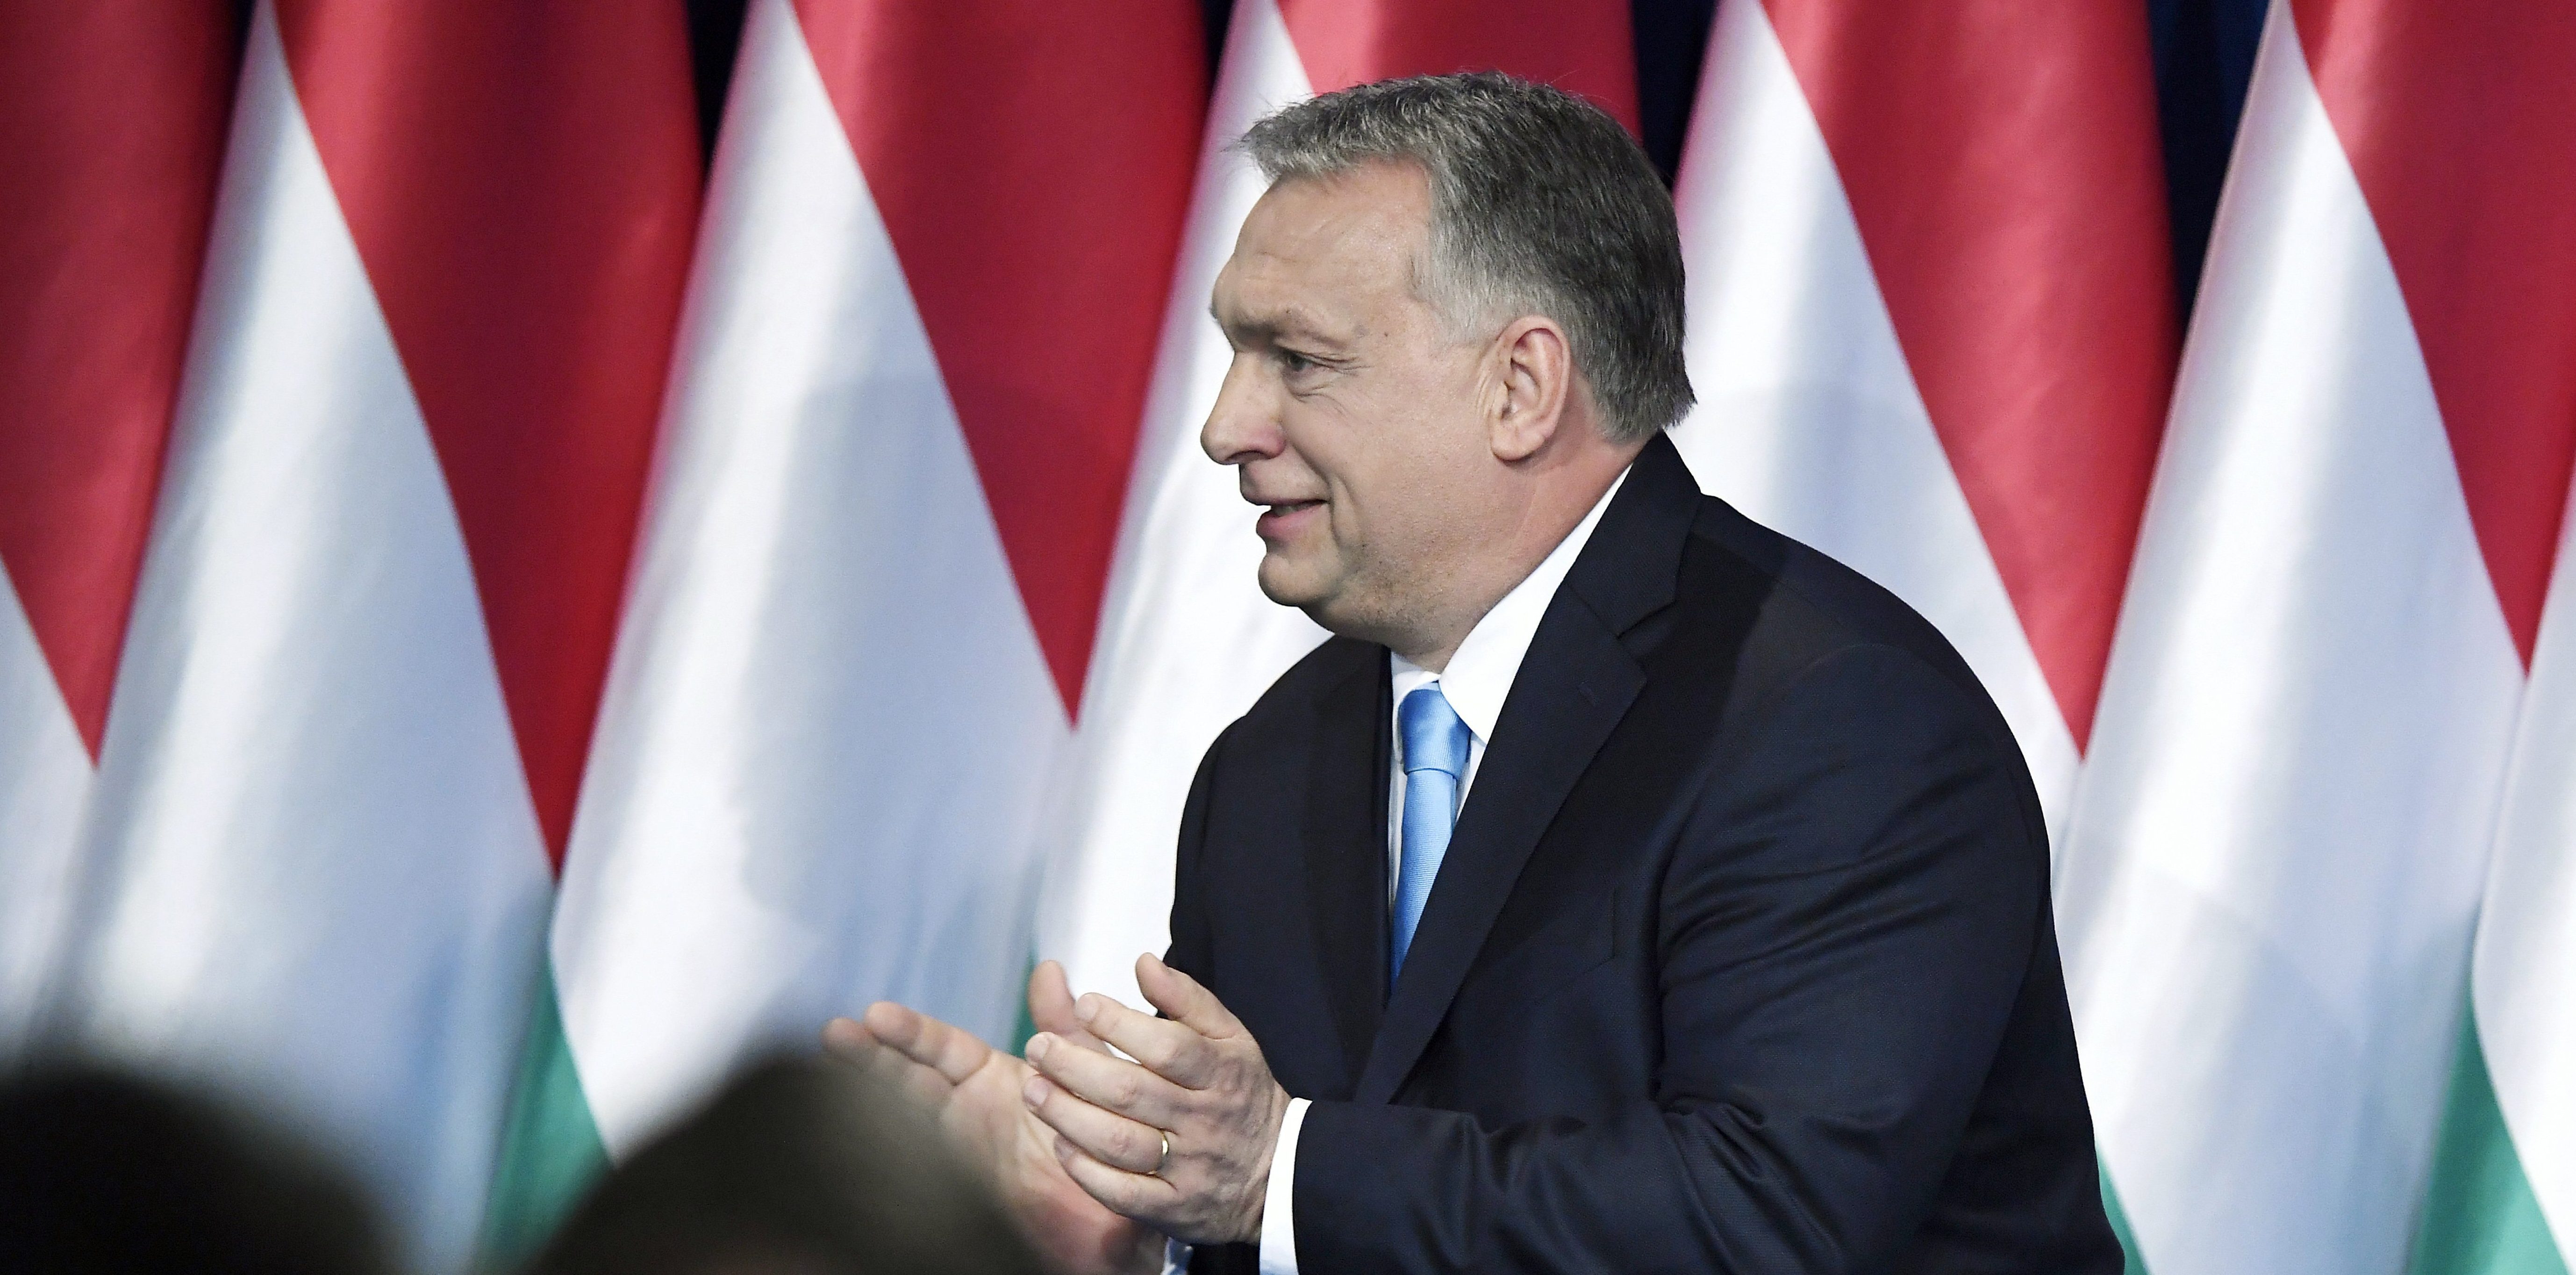 Orbán Maďarsko